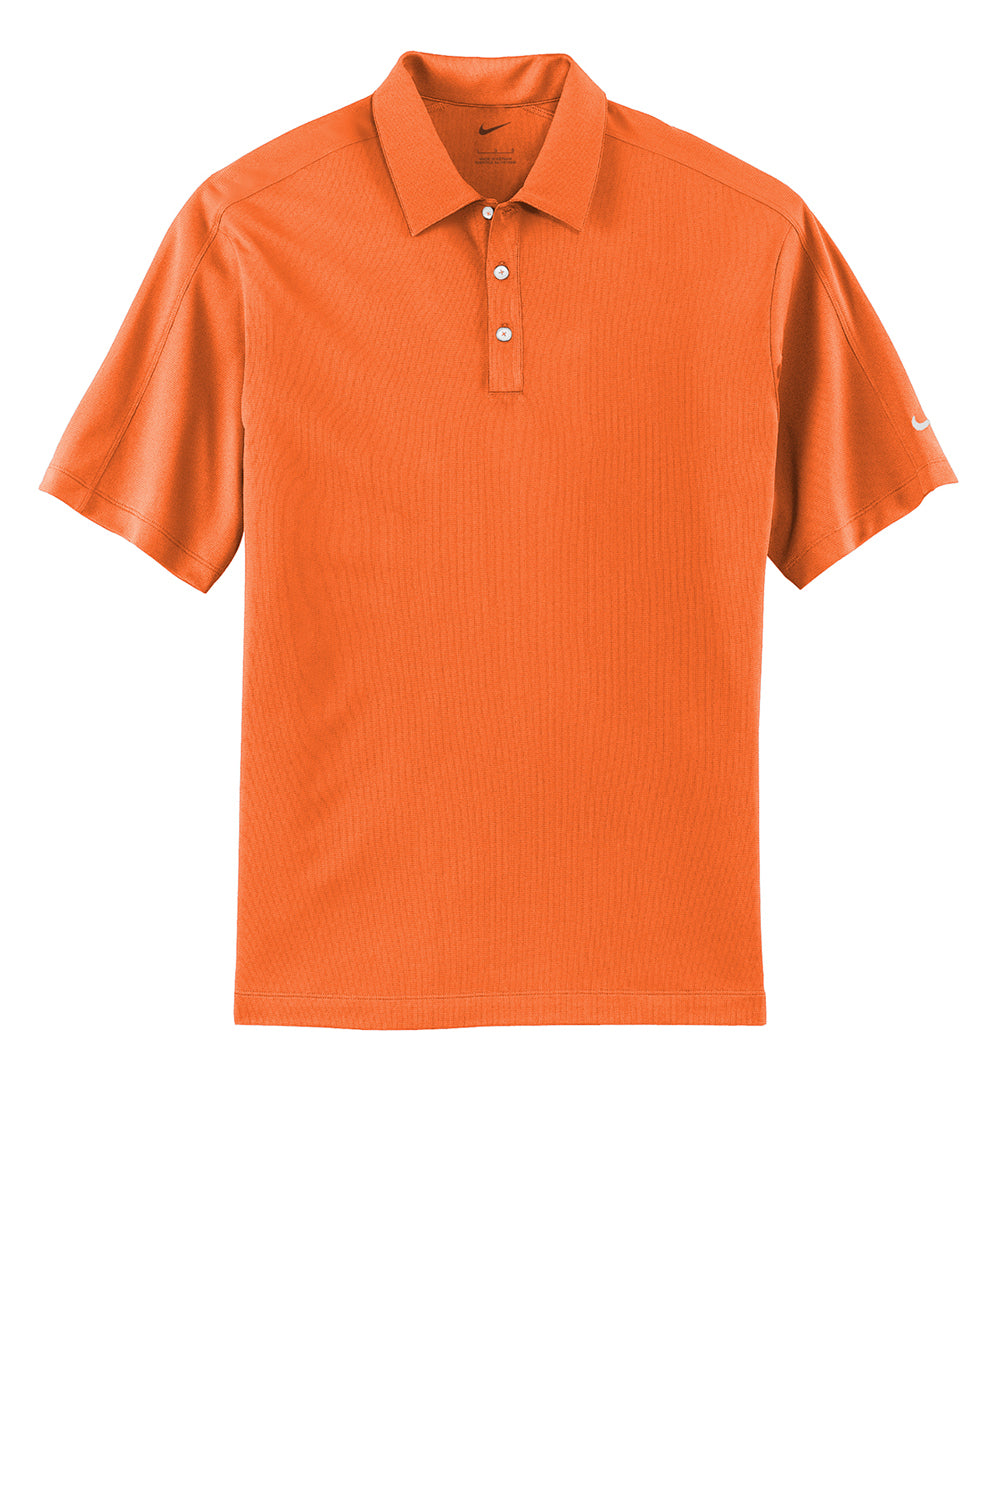 Nike 266998 Mens Tech Sport Dri-Fit Moisture Wicking Short Sleeve Polo Shirt Solar Orange Flat Front